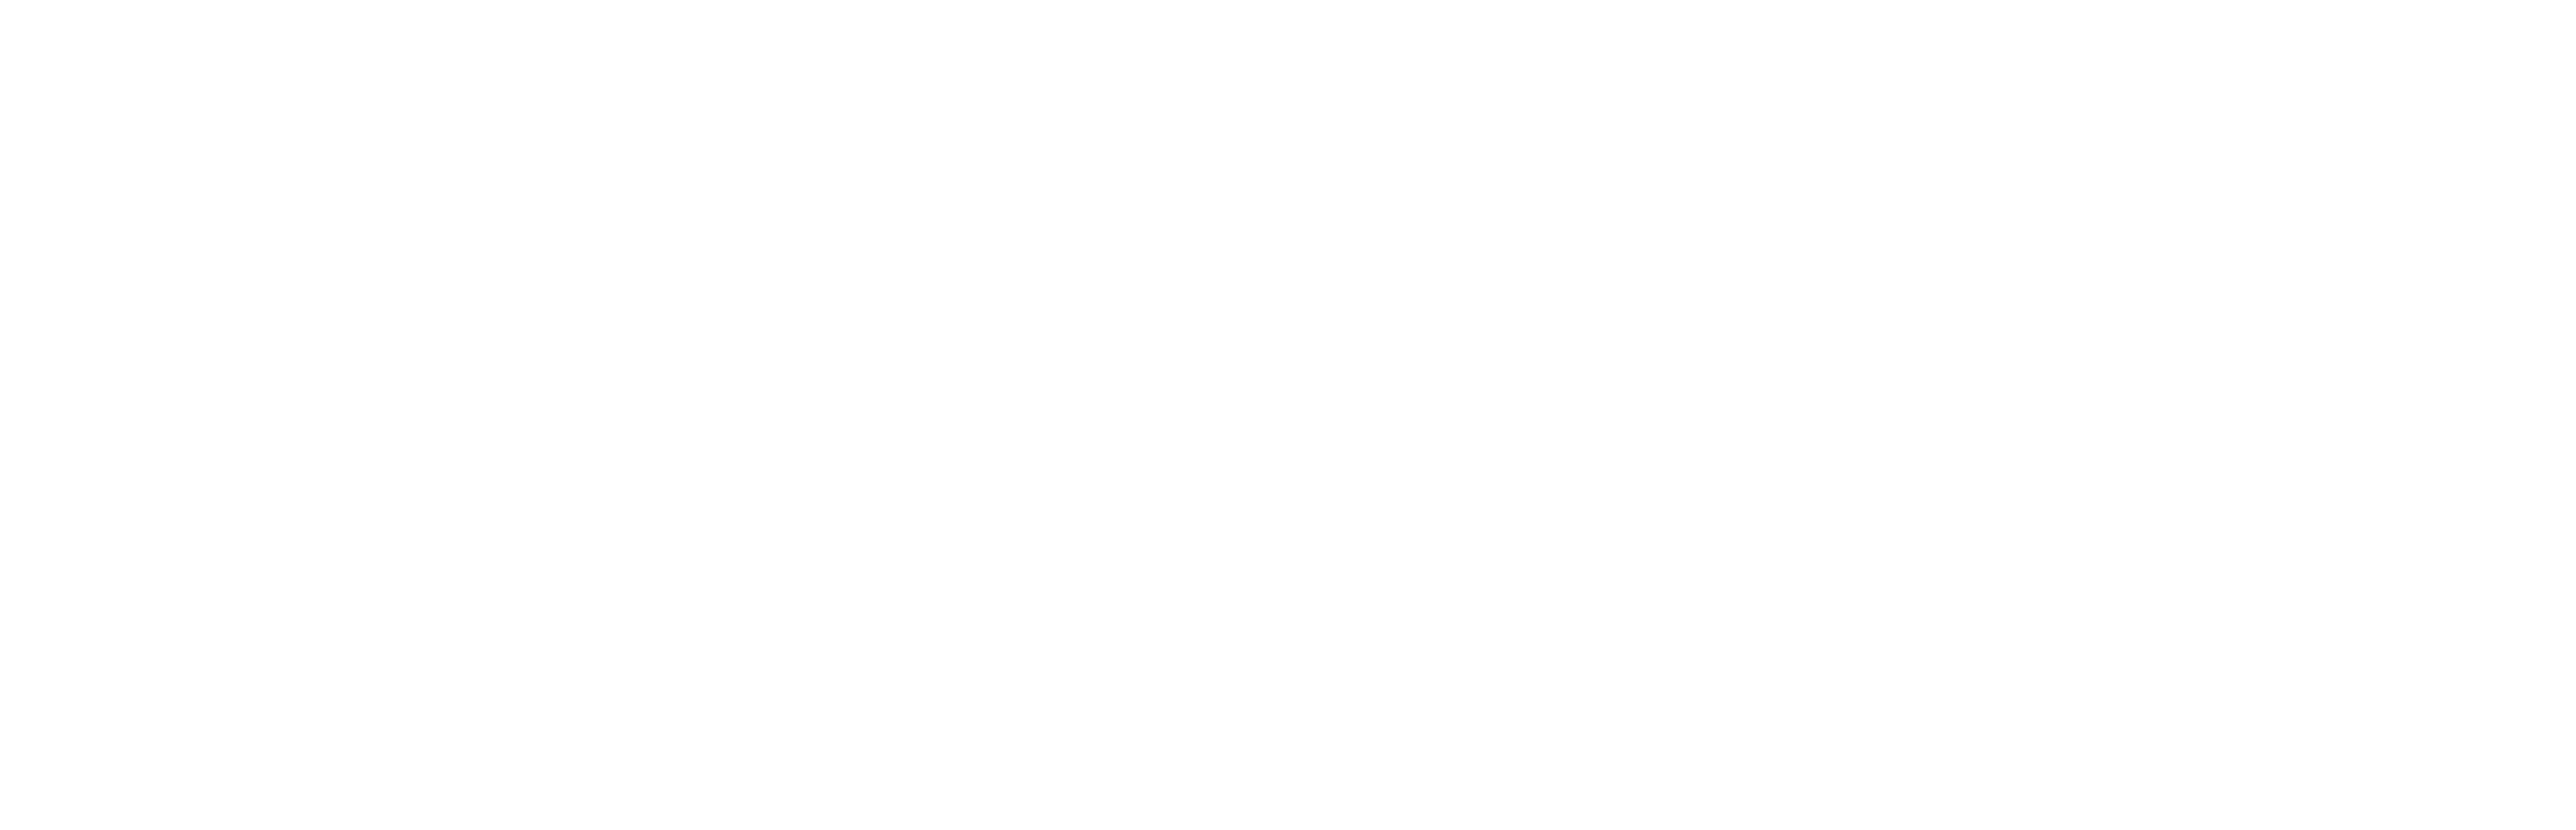 SciTech logo in white